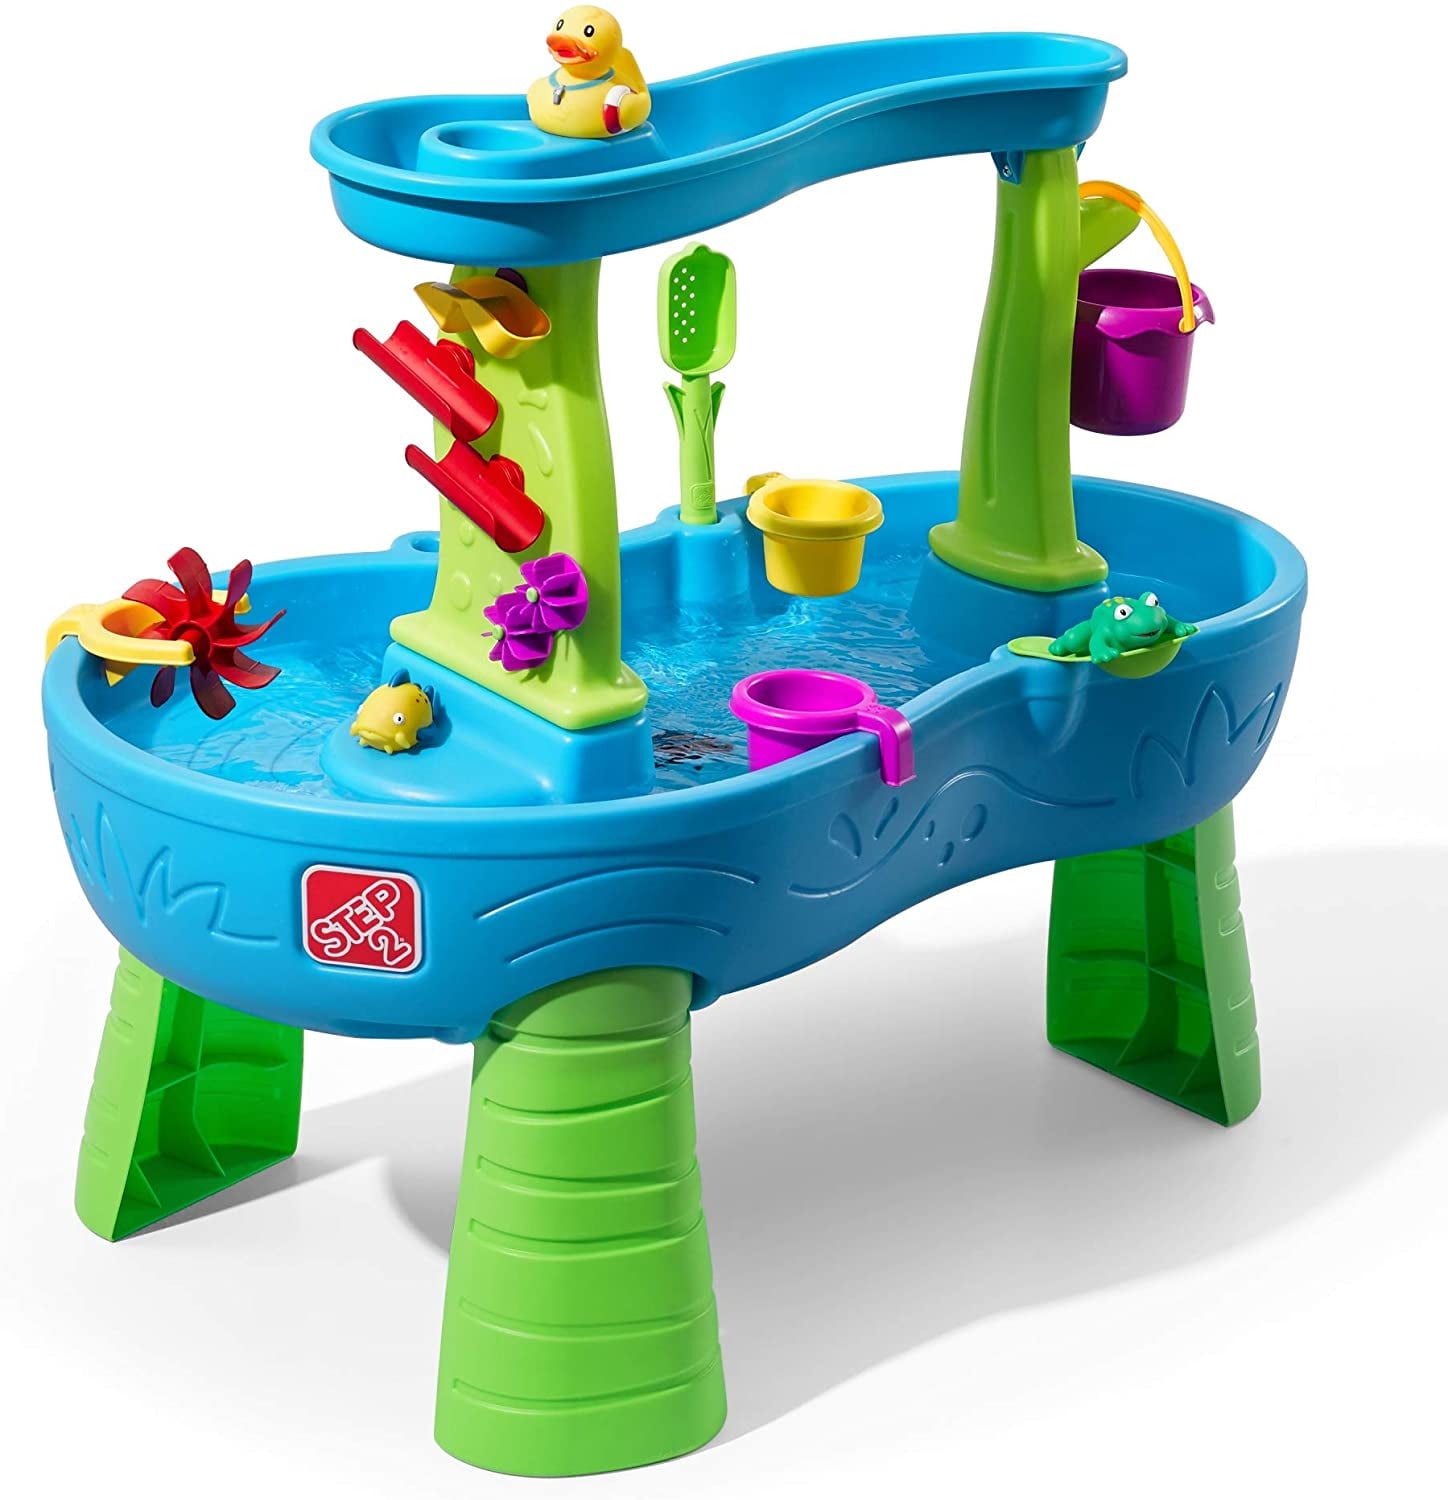 2 in 1 Sand & Water Table Activity Play Center Kids Splash Pond Beach Toy Set 